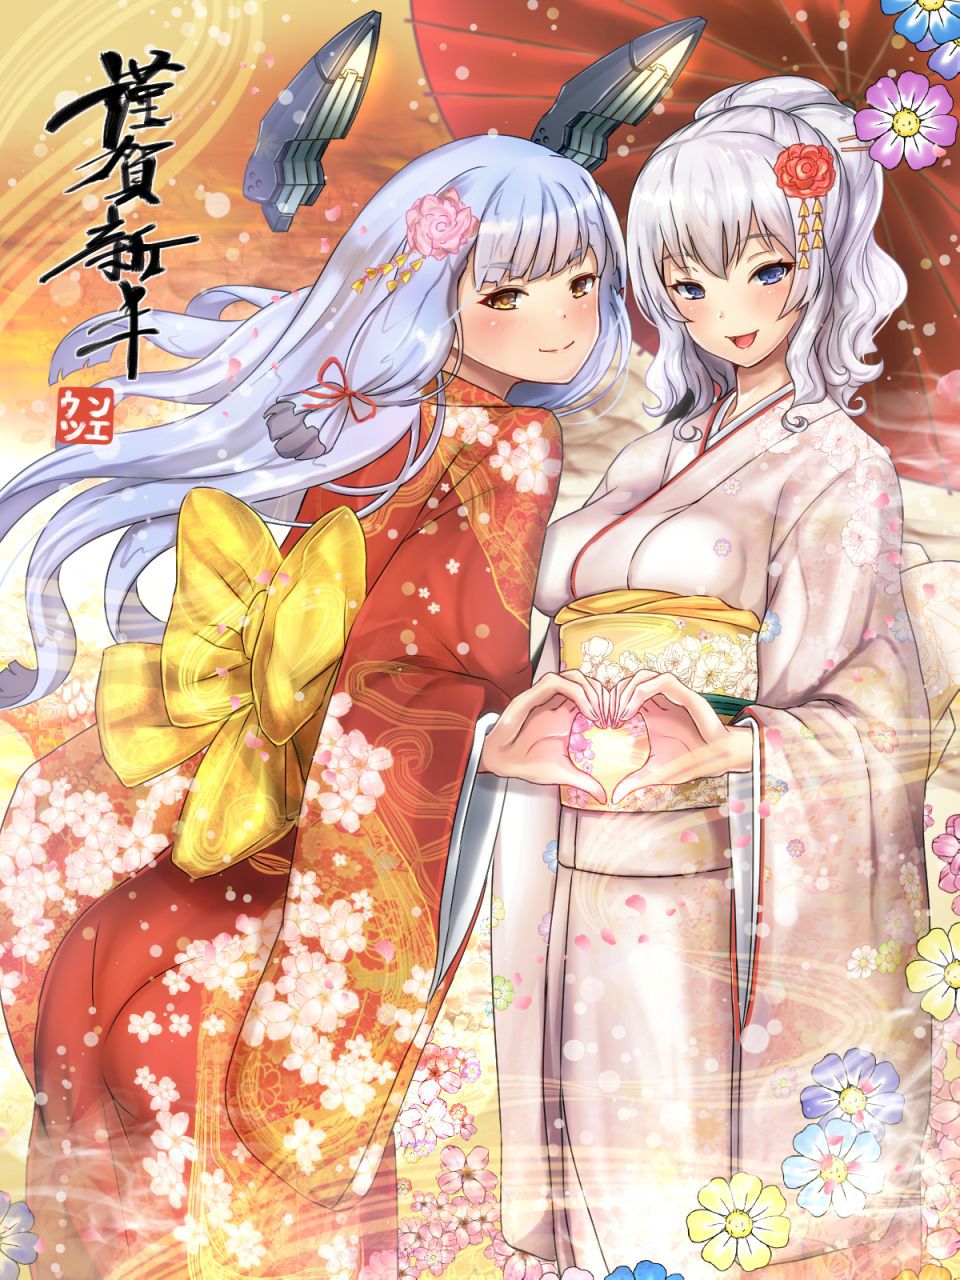 [Secondary-ZIP: coming of age day so... Rather than haregi-kimono 2016 new year kimono girl pictures 100 3